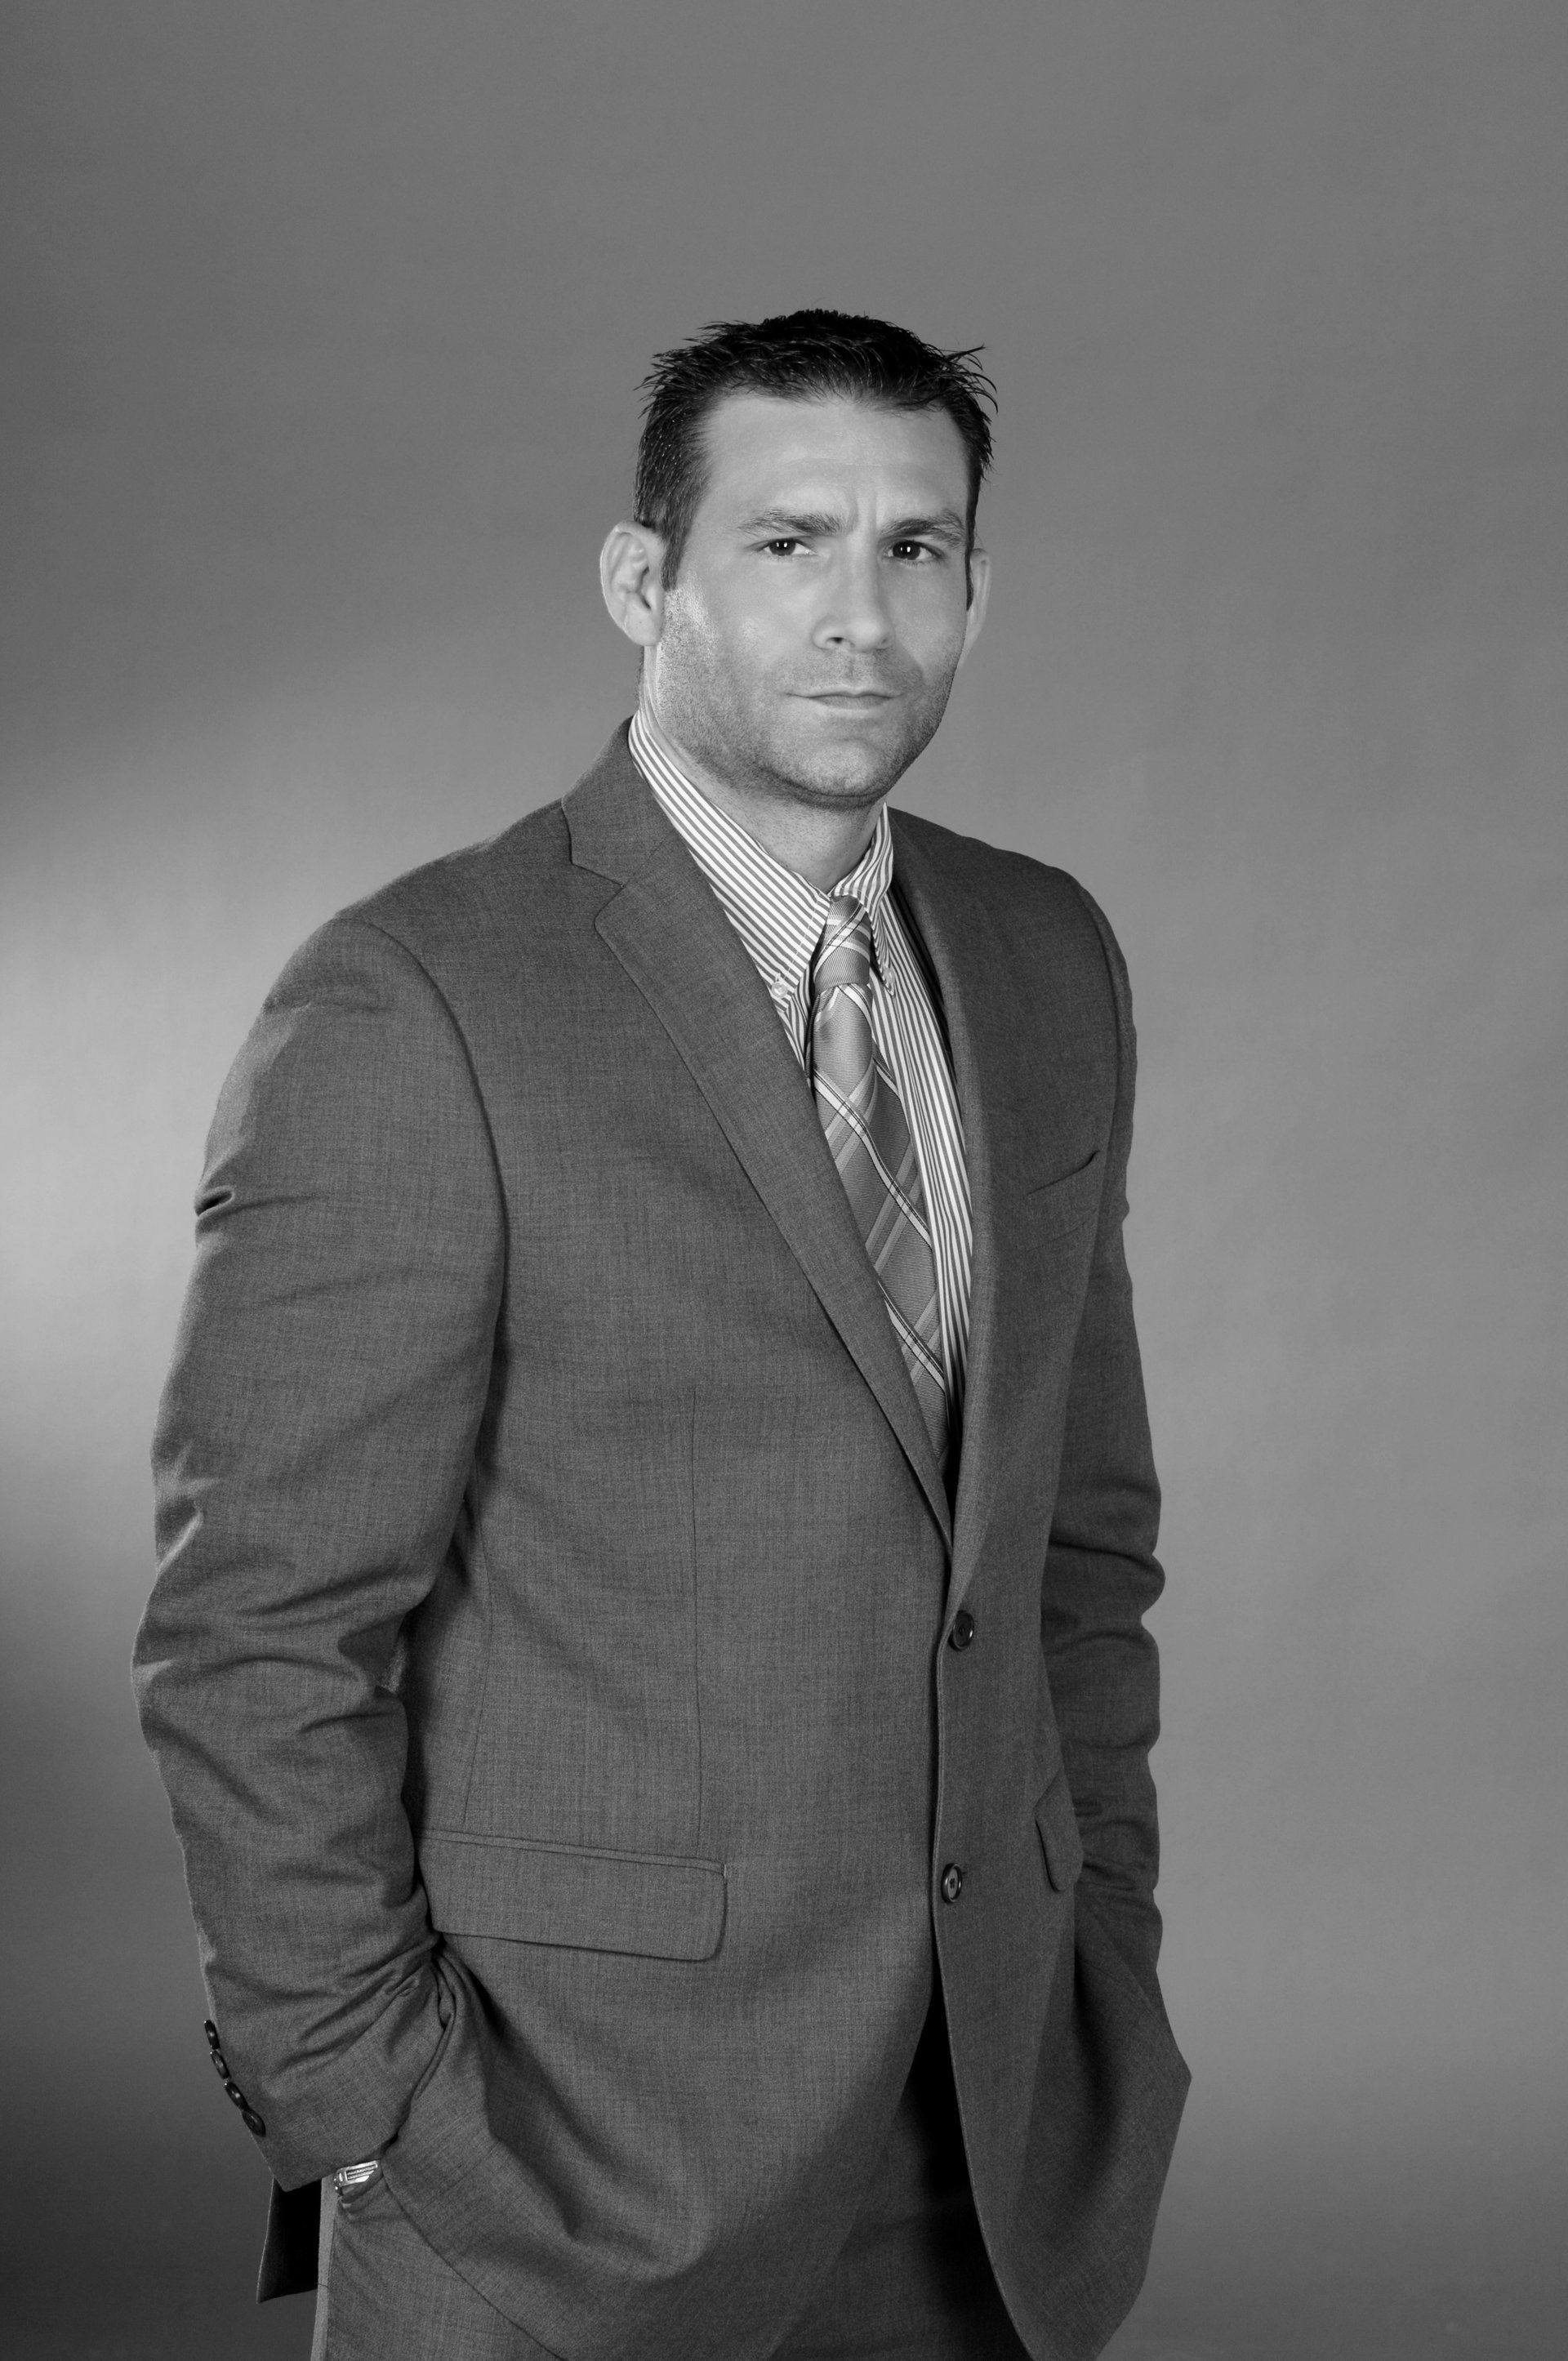 An image of Broward criminal attorney Antonio D. Quinn